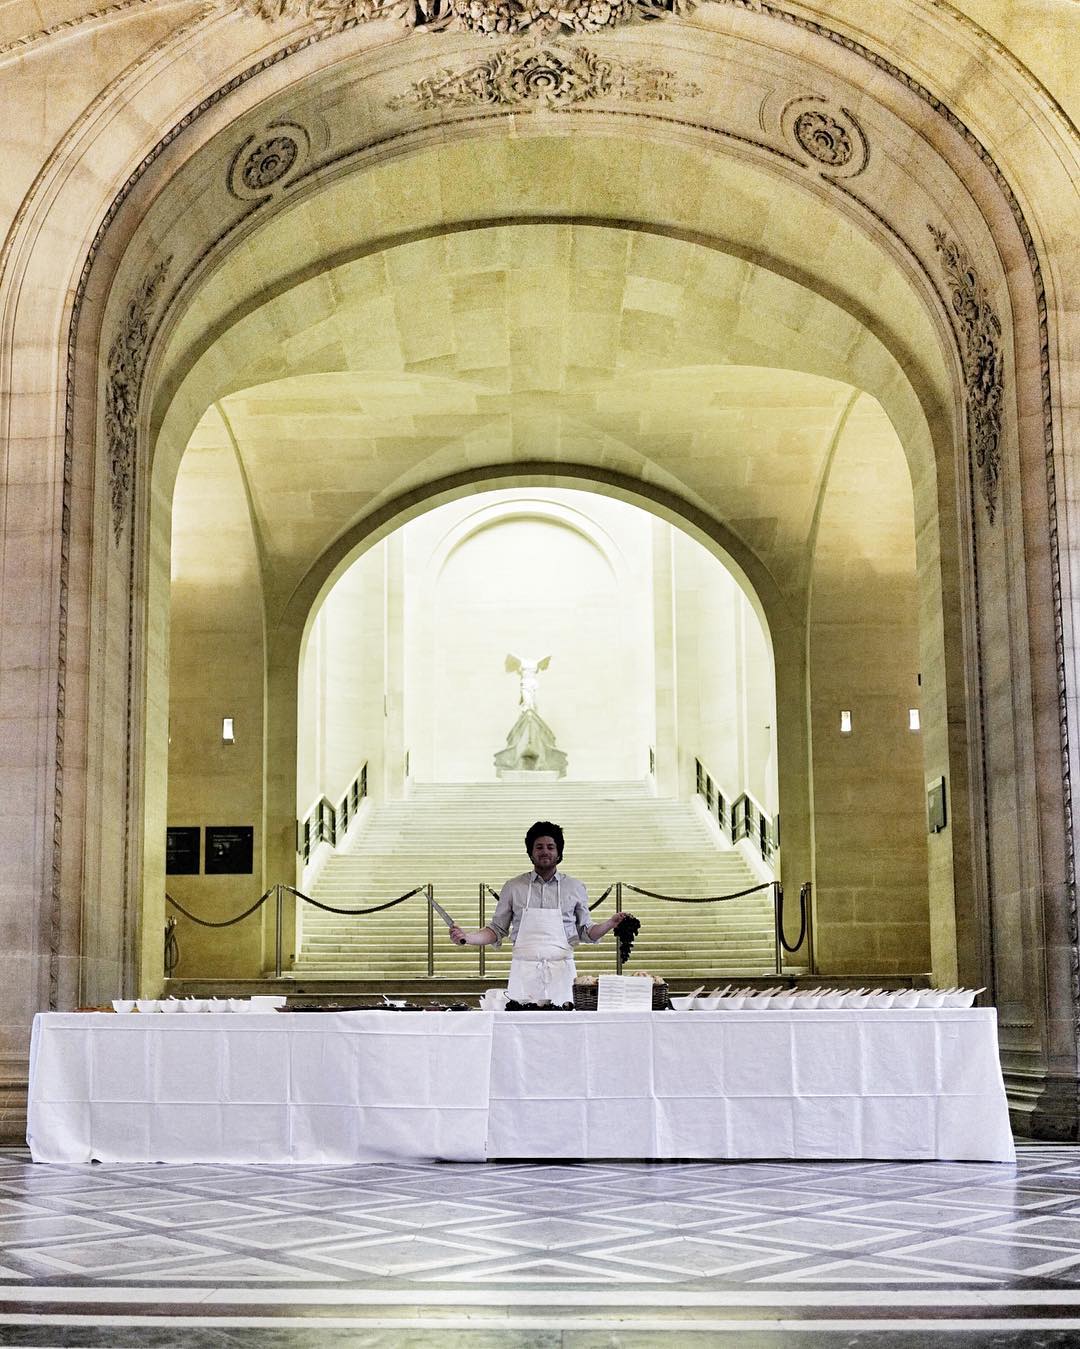 Chef Jean Imbert prepares breakfast at the Louvre